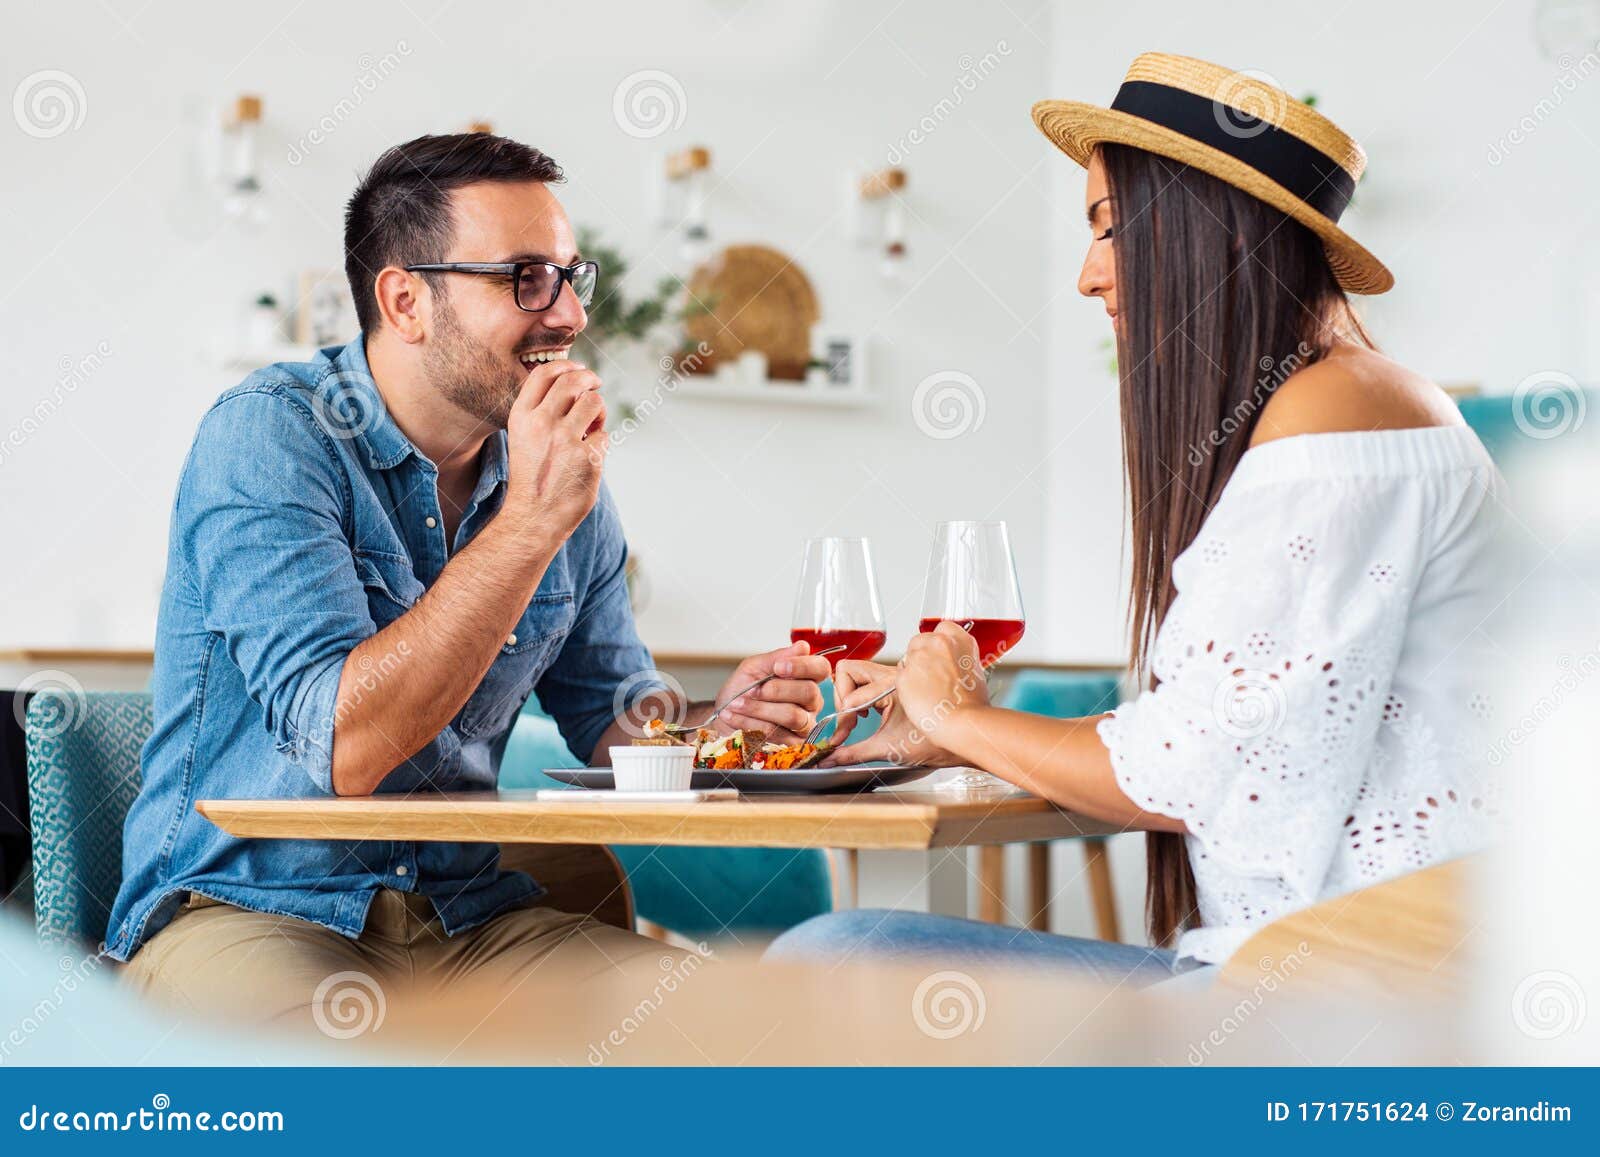 Dating cafe essen